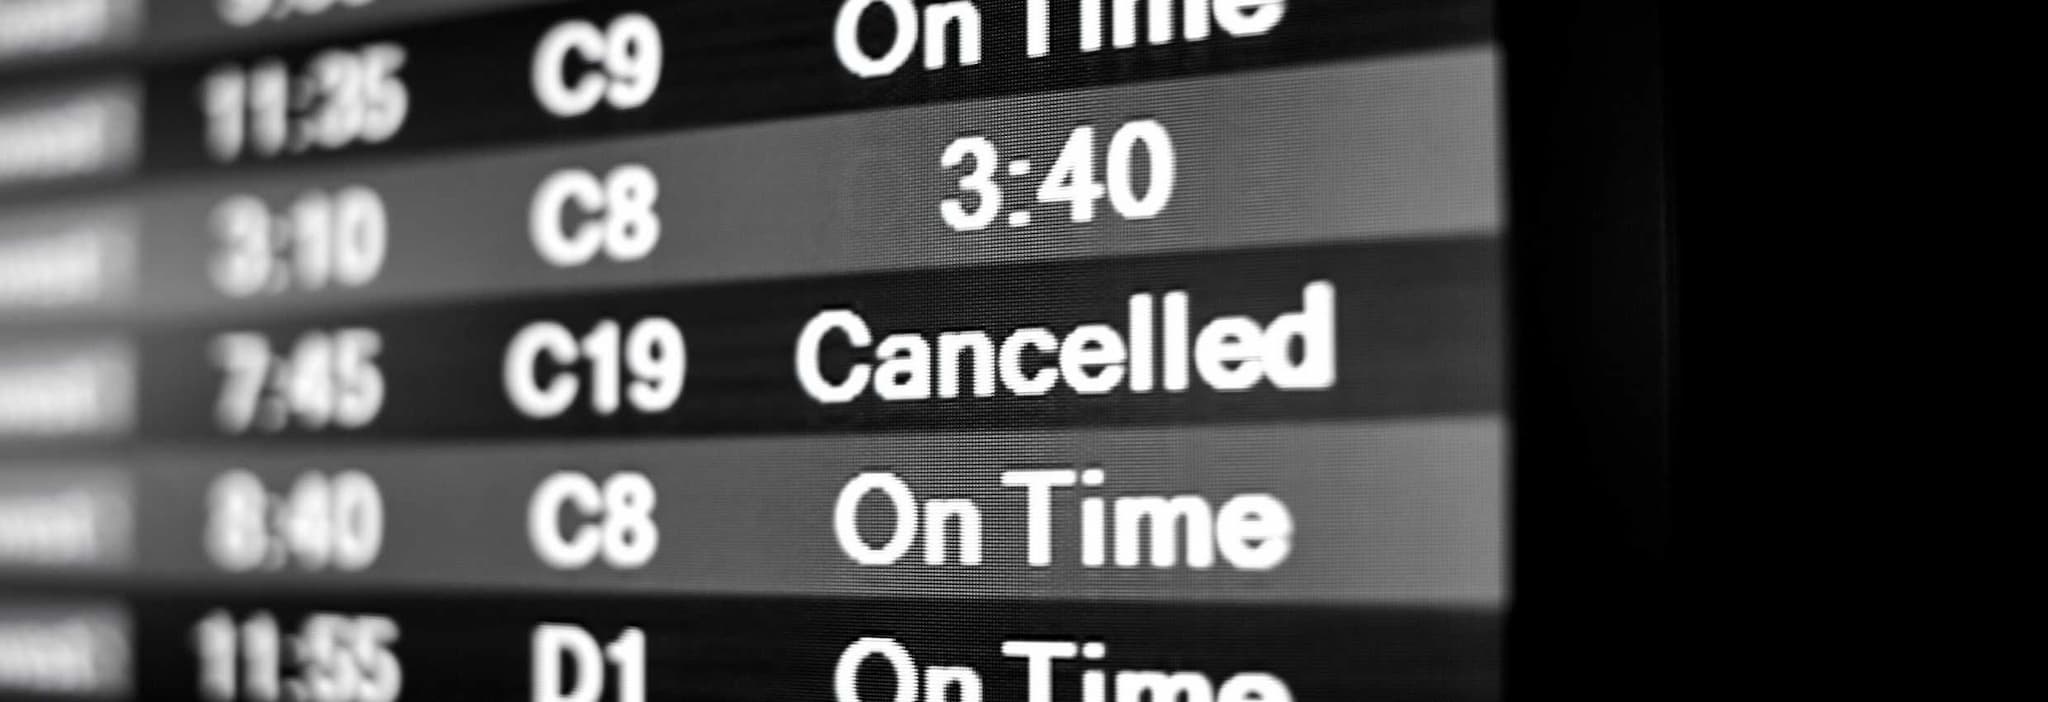 Avoid the flight cancellation trauma